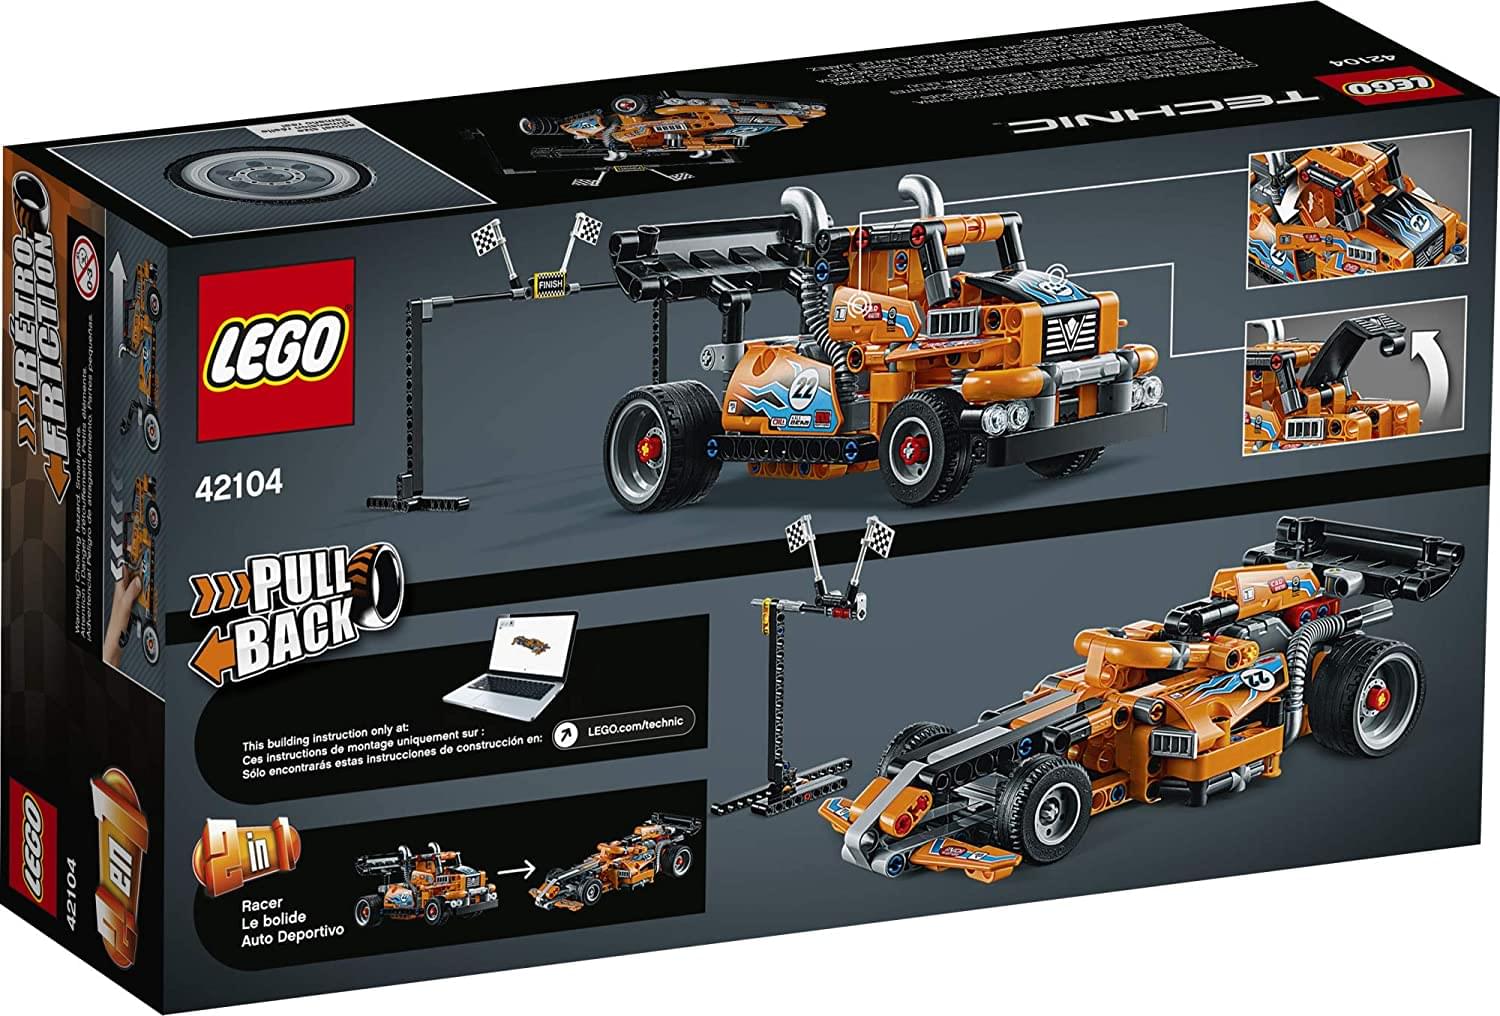 LEGO Technic Race Truck 227 Piece Building Kit